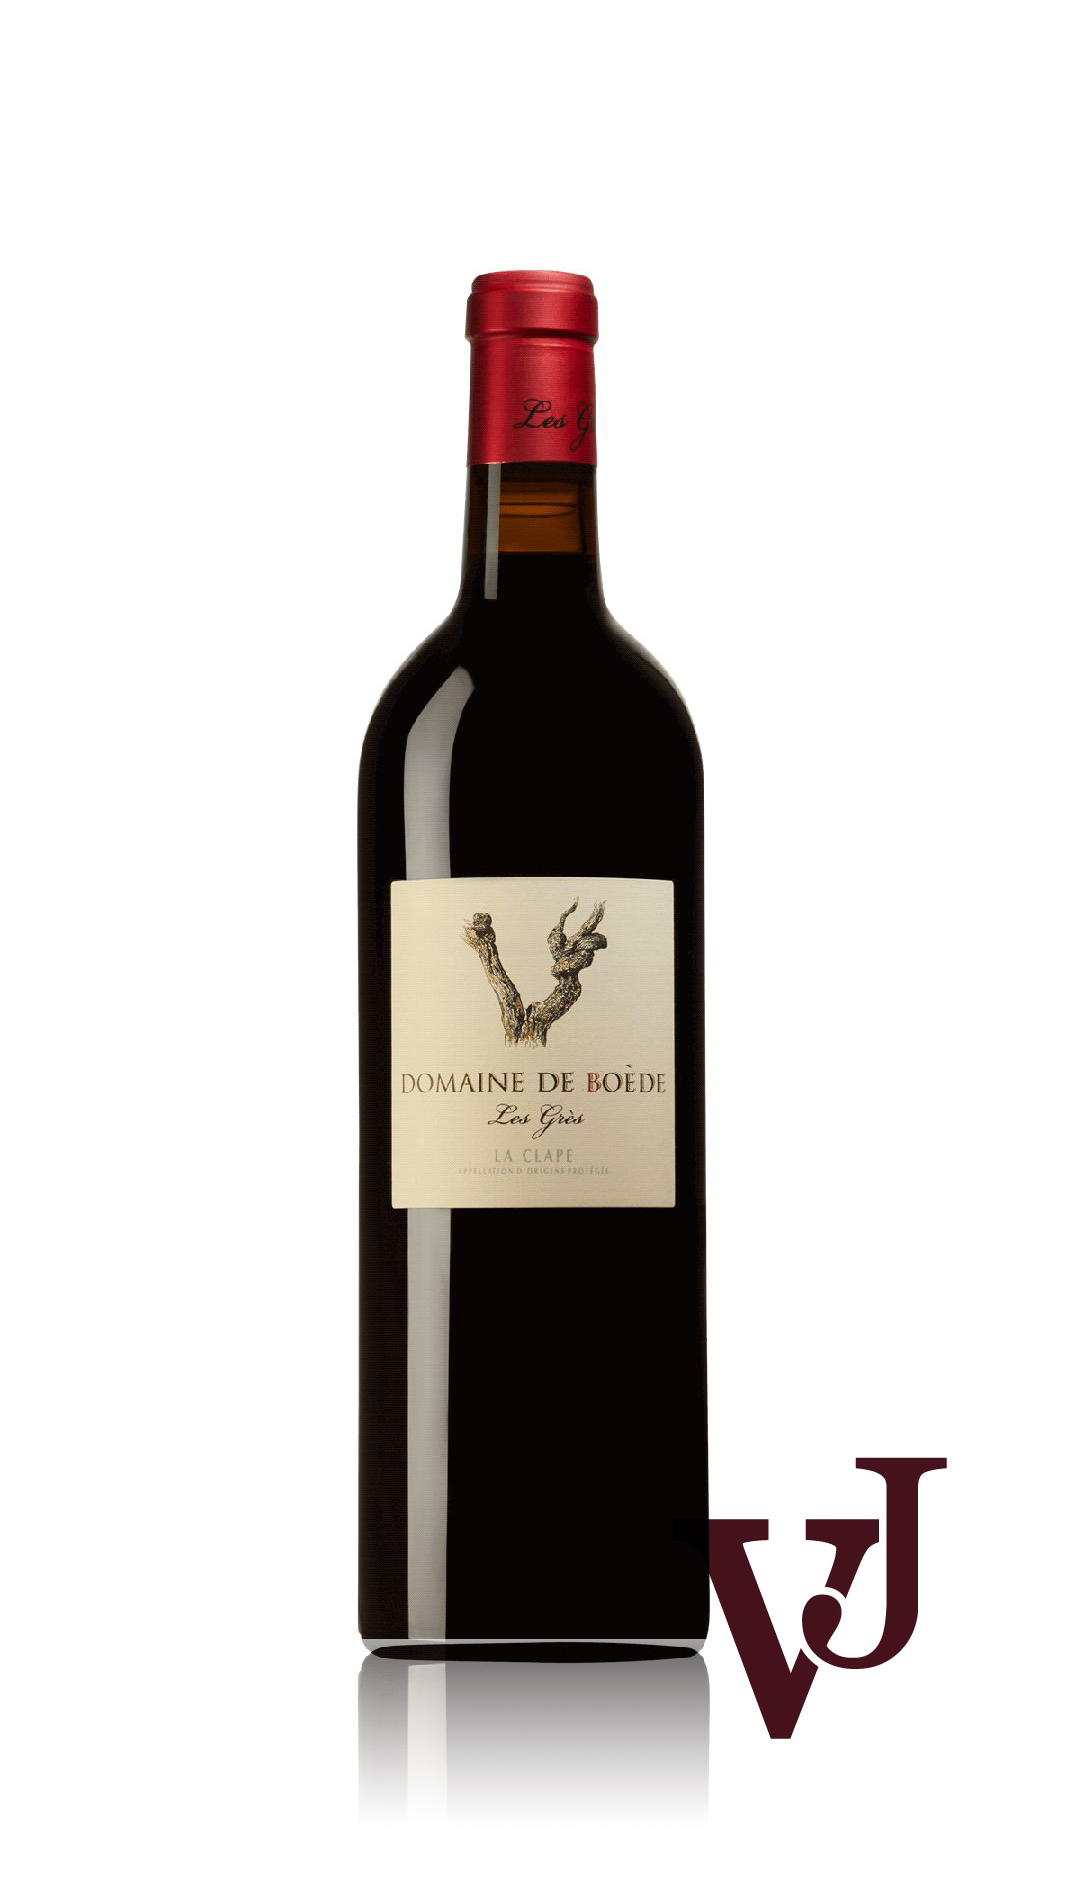 Vitt Vin - Les Grès Domaine de Boède 2021 artikel nummer 9443901 från producenten Domaine De Boéde från området Frankrike